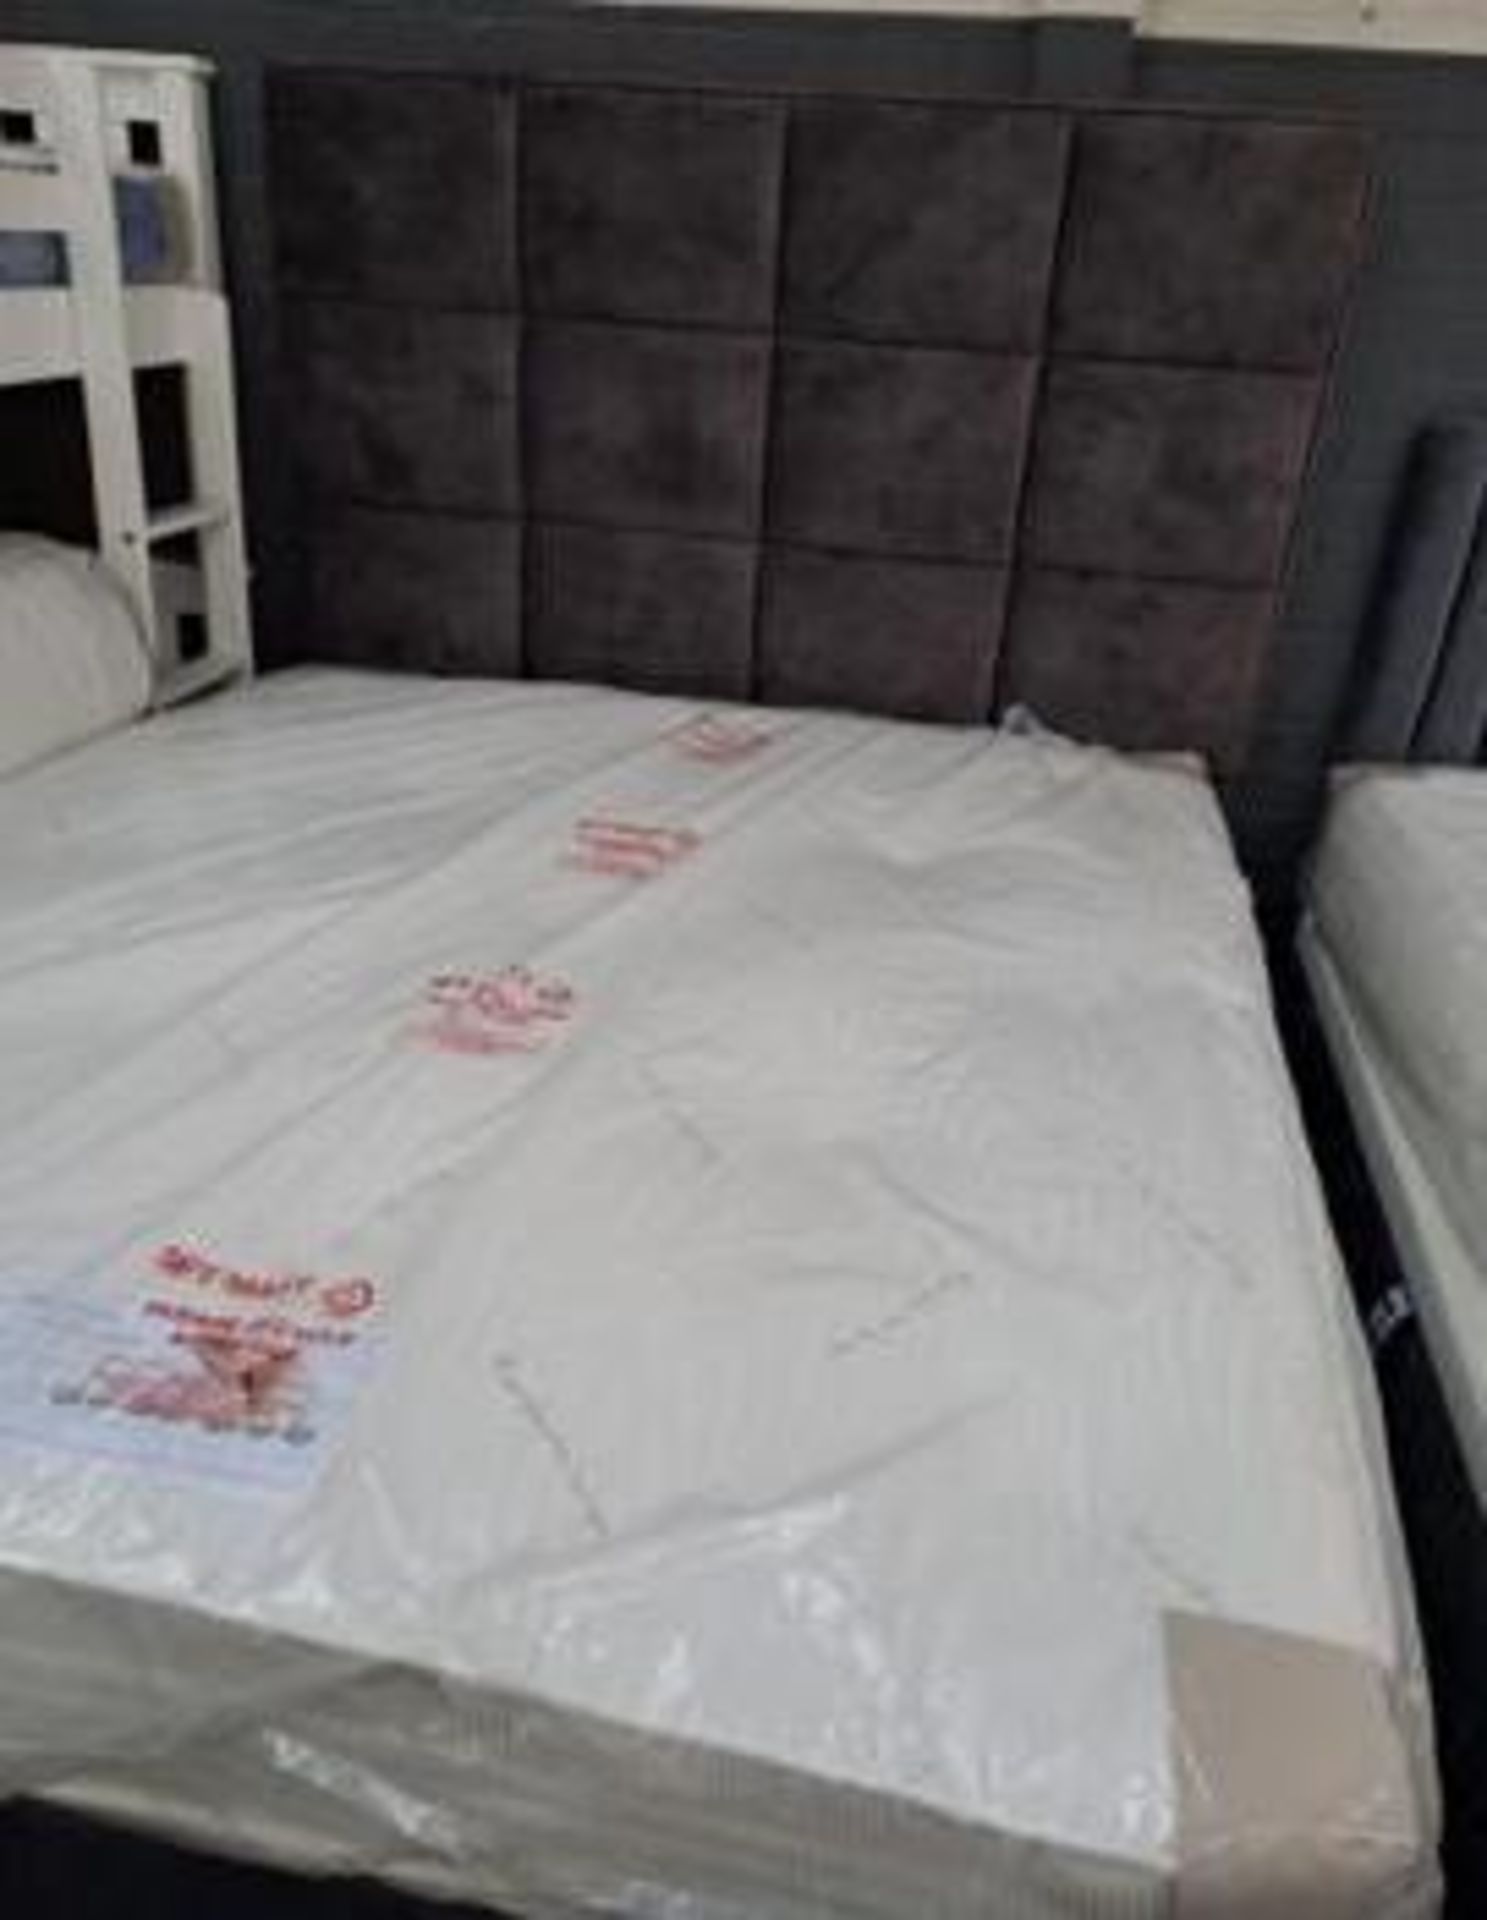 *EX DISPLAY* Milan king size super divan set includes 4 drawer base & headboard with mattress. - Image 2 of 2